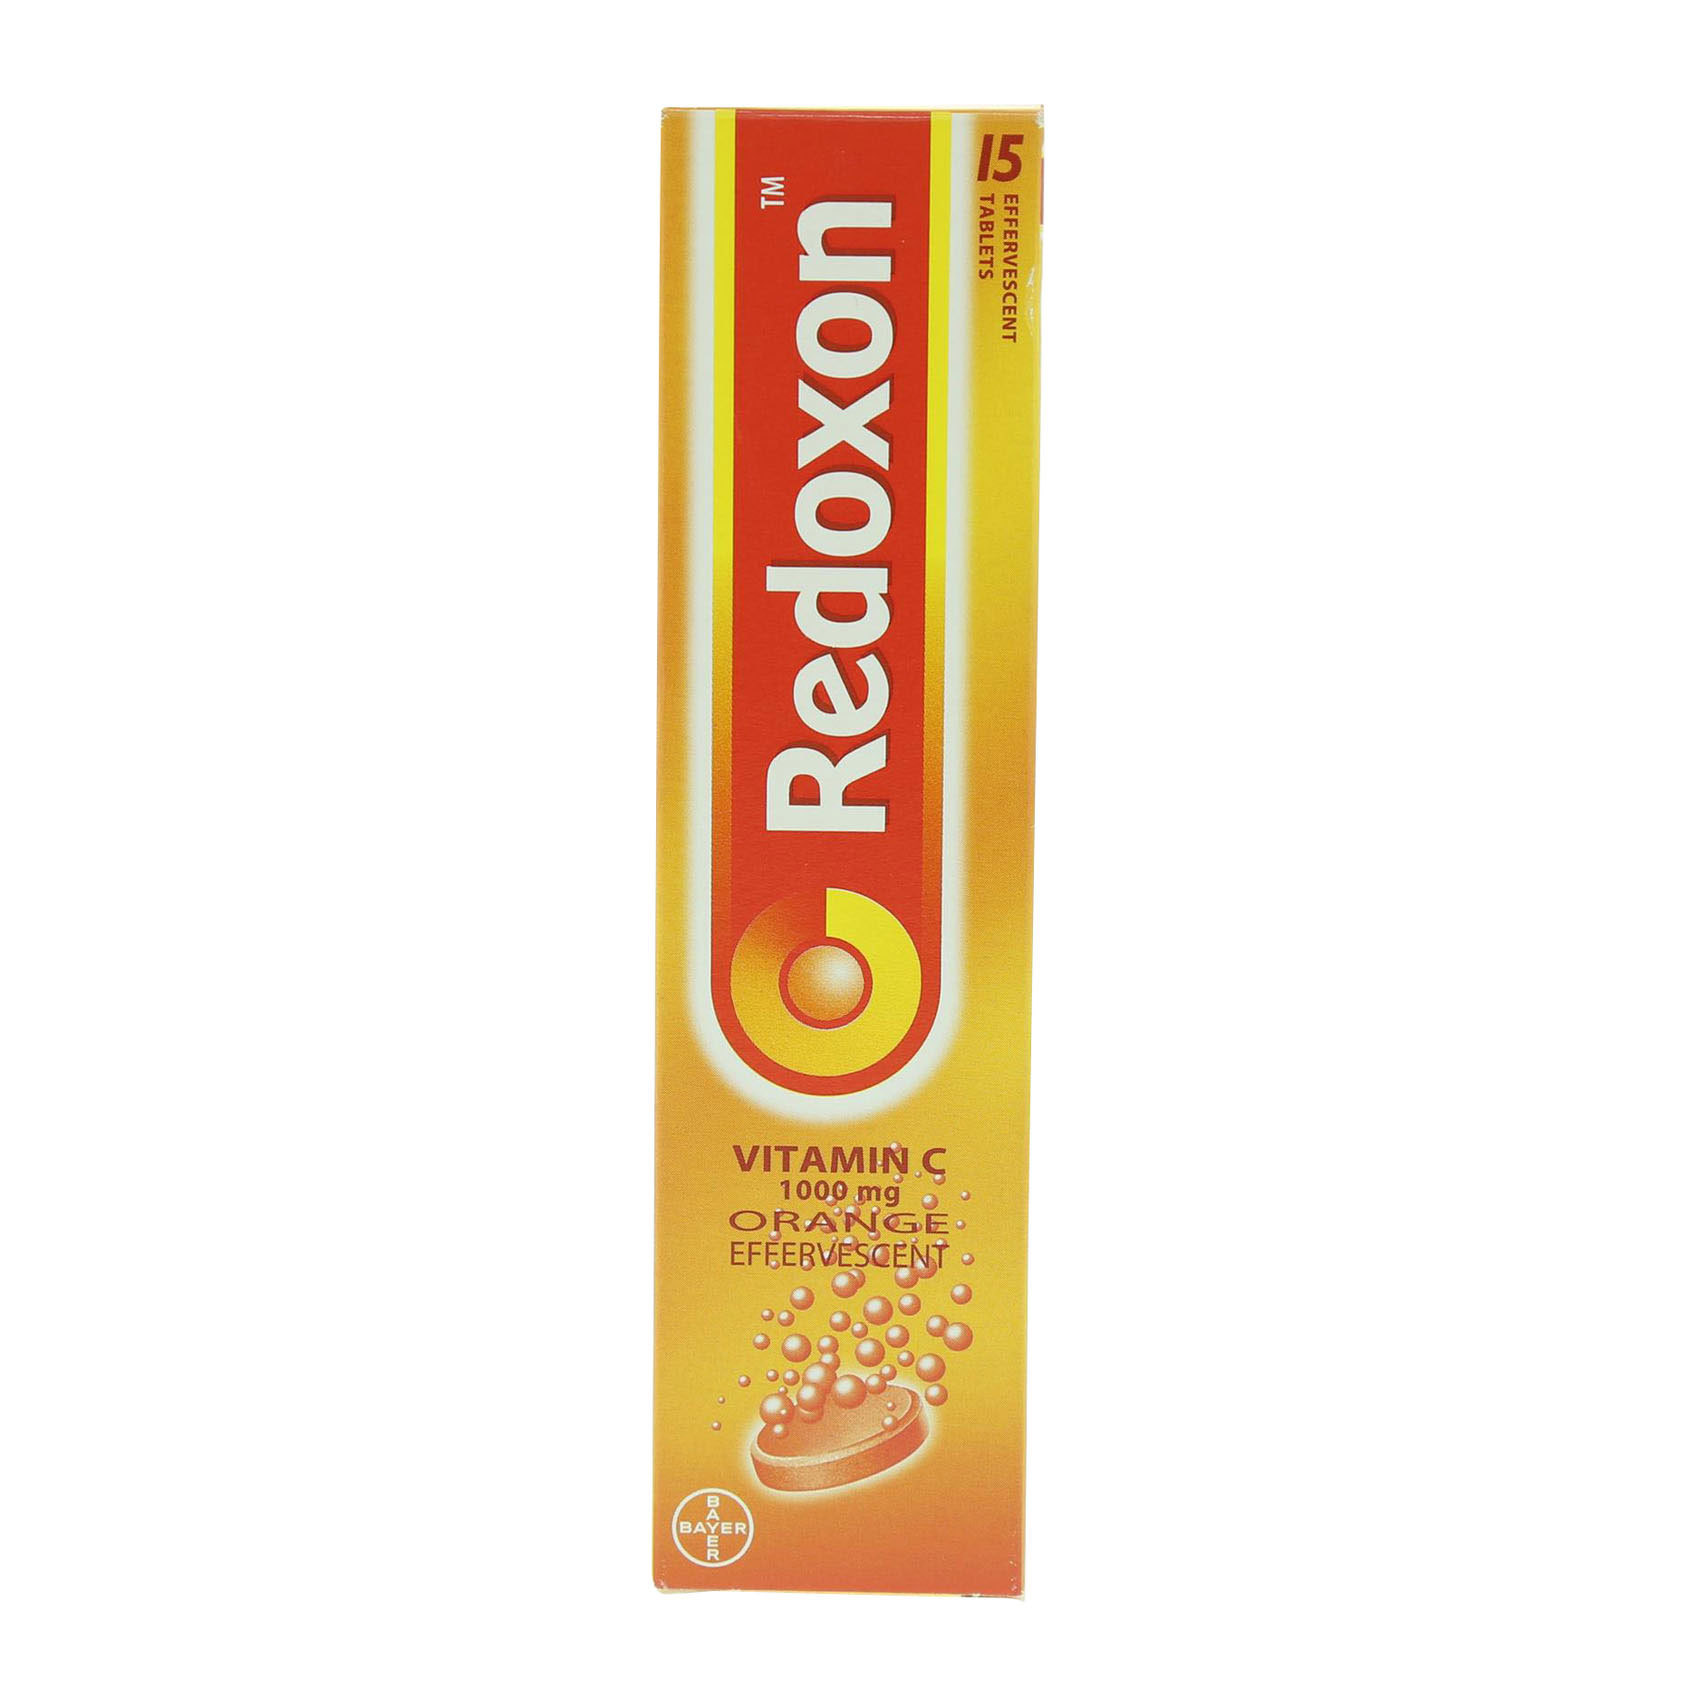 Buy Bayer Redoxon Vitamin C 1000mg Orange Effervescent Online Shop Health Fitness On Carrefour Uae